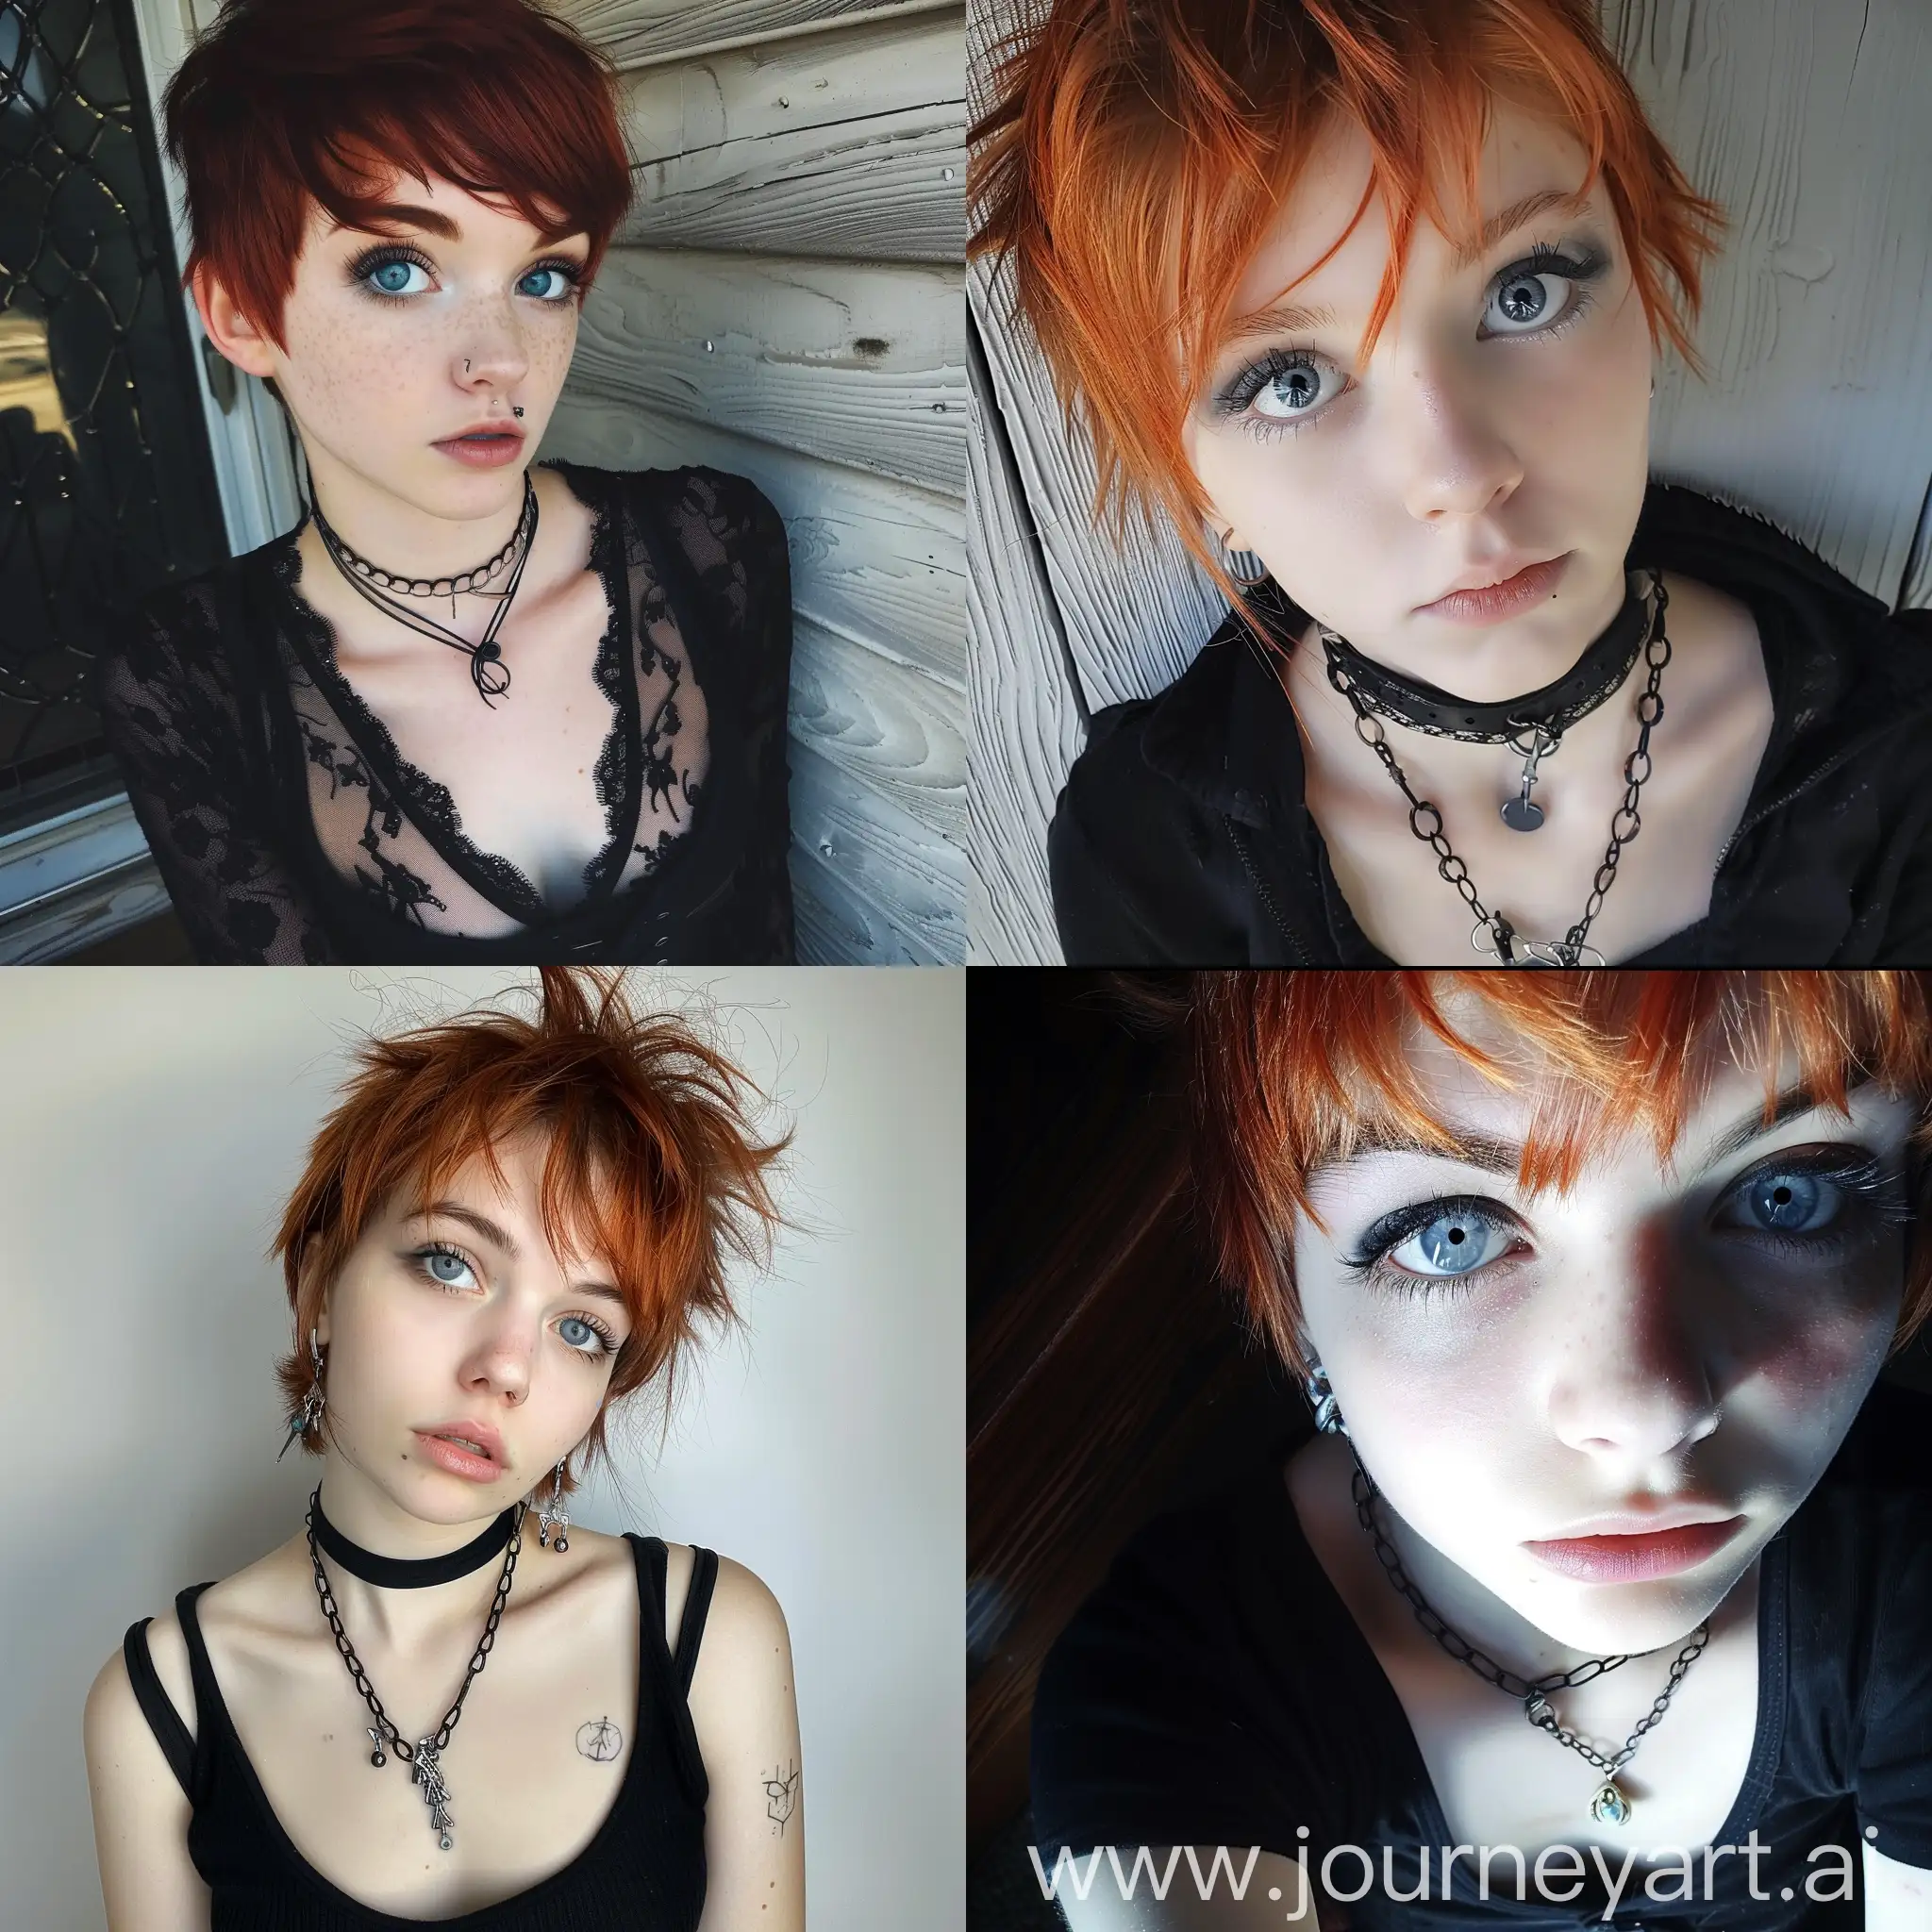 16 year old girl, goth, pixie cut, red hair, icy blue eyes